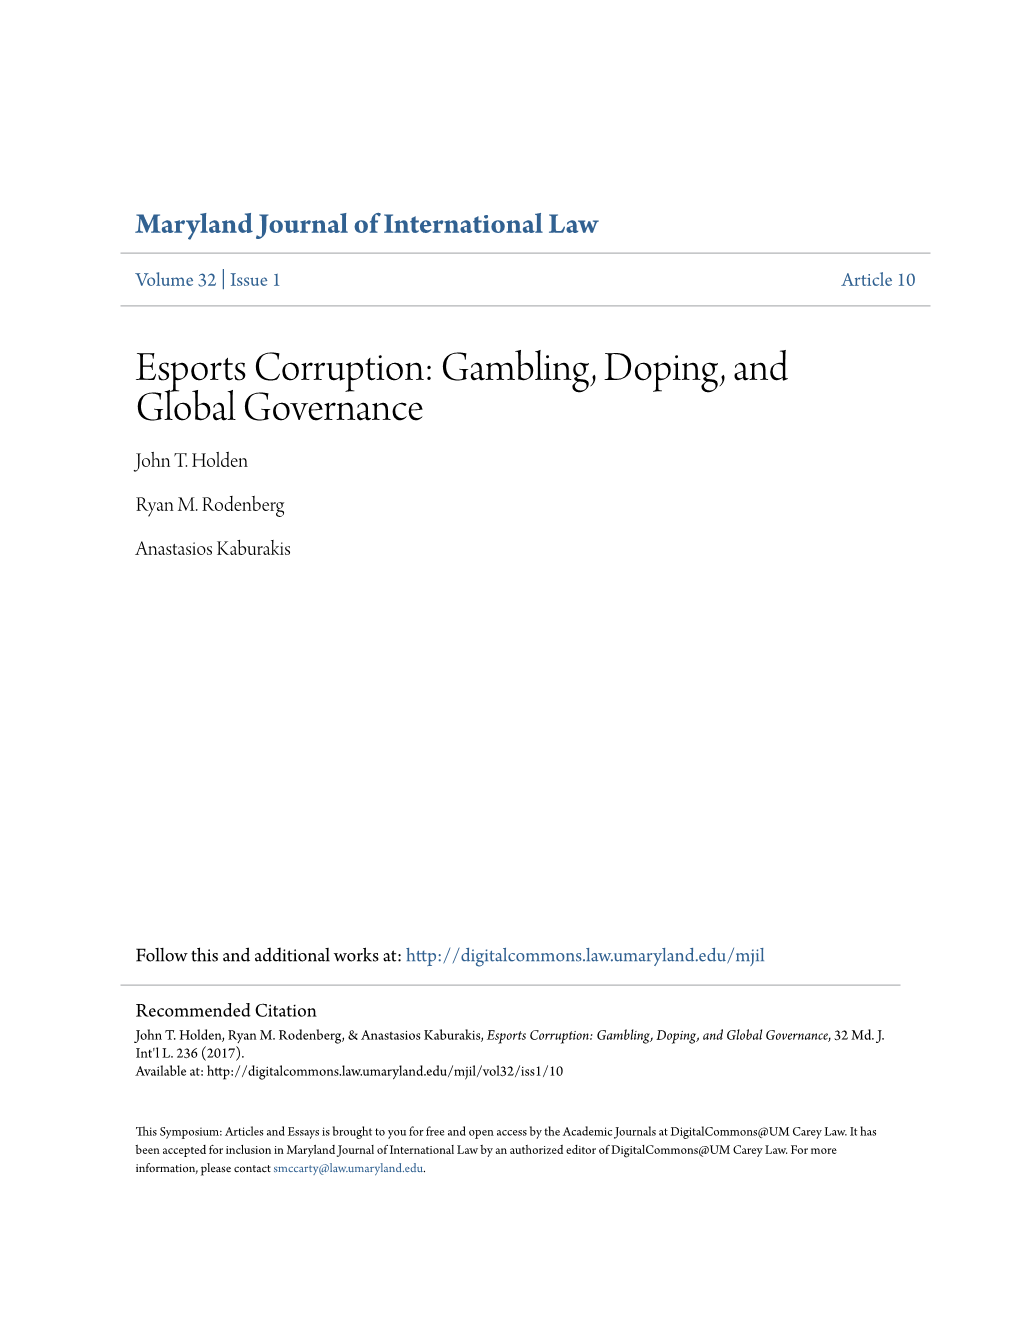 Esports Corruption: Gambling, Doping, and Global Governance John T